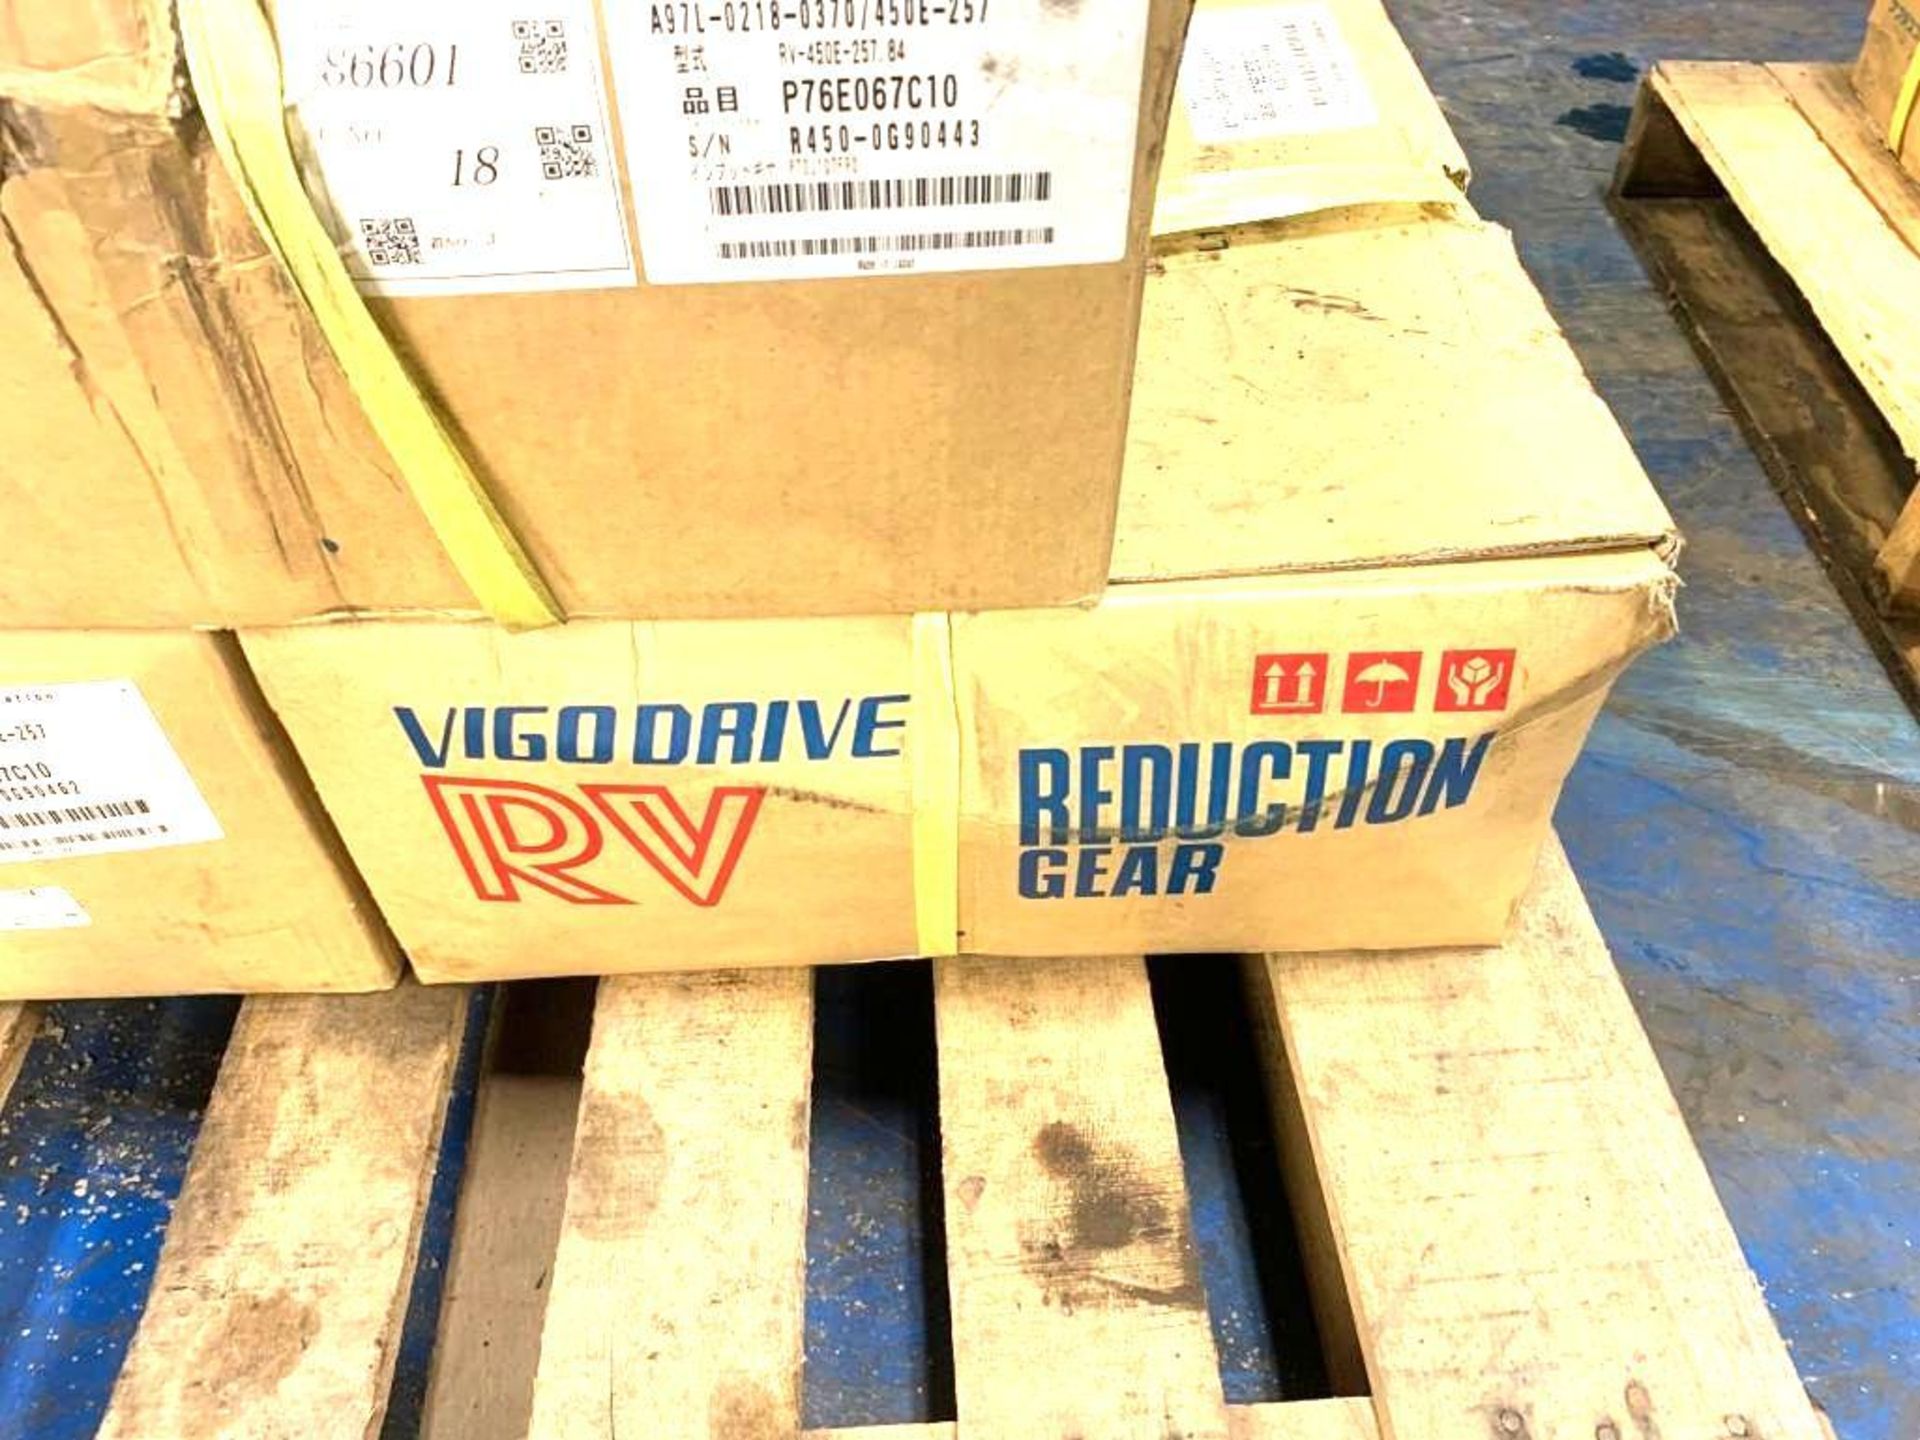 Lot of (6) NEW - Fanuc / Vigo Drives #A97L-0218-0370/450E-257 Reduction Gears - Image 2 of 3